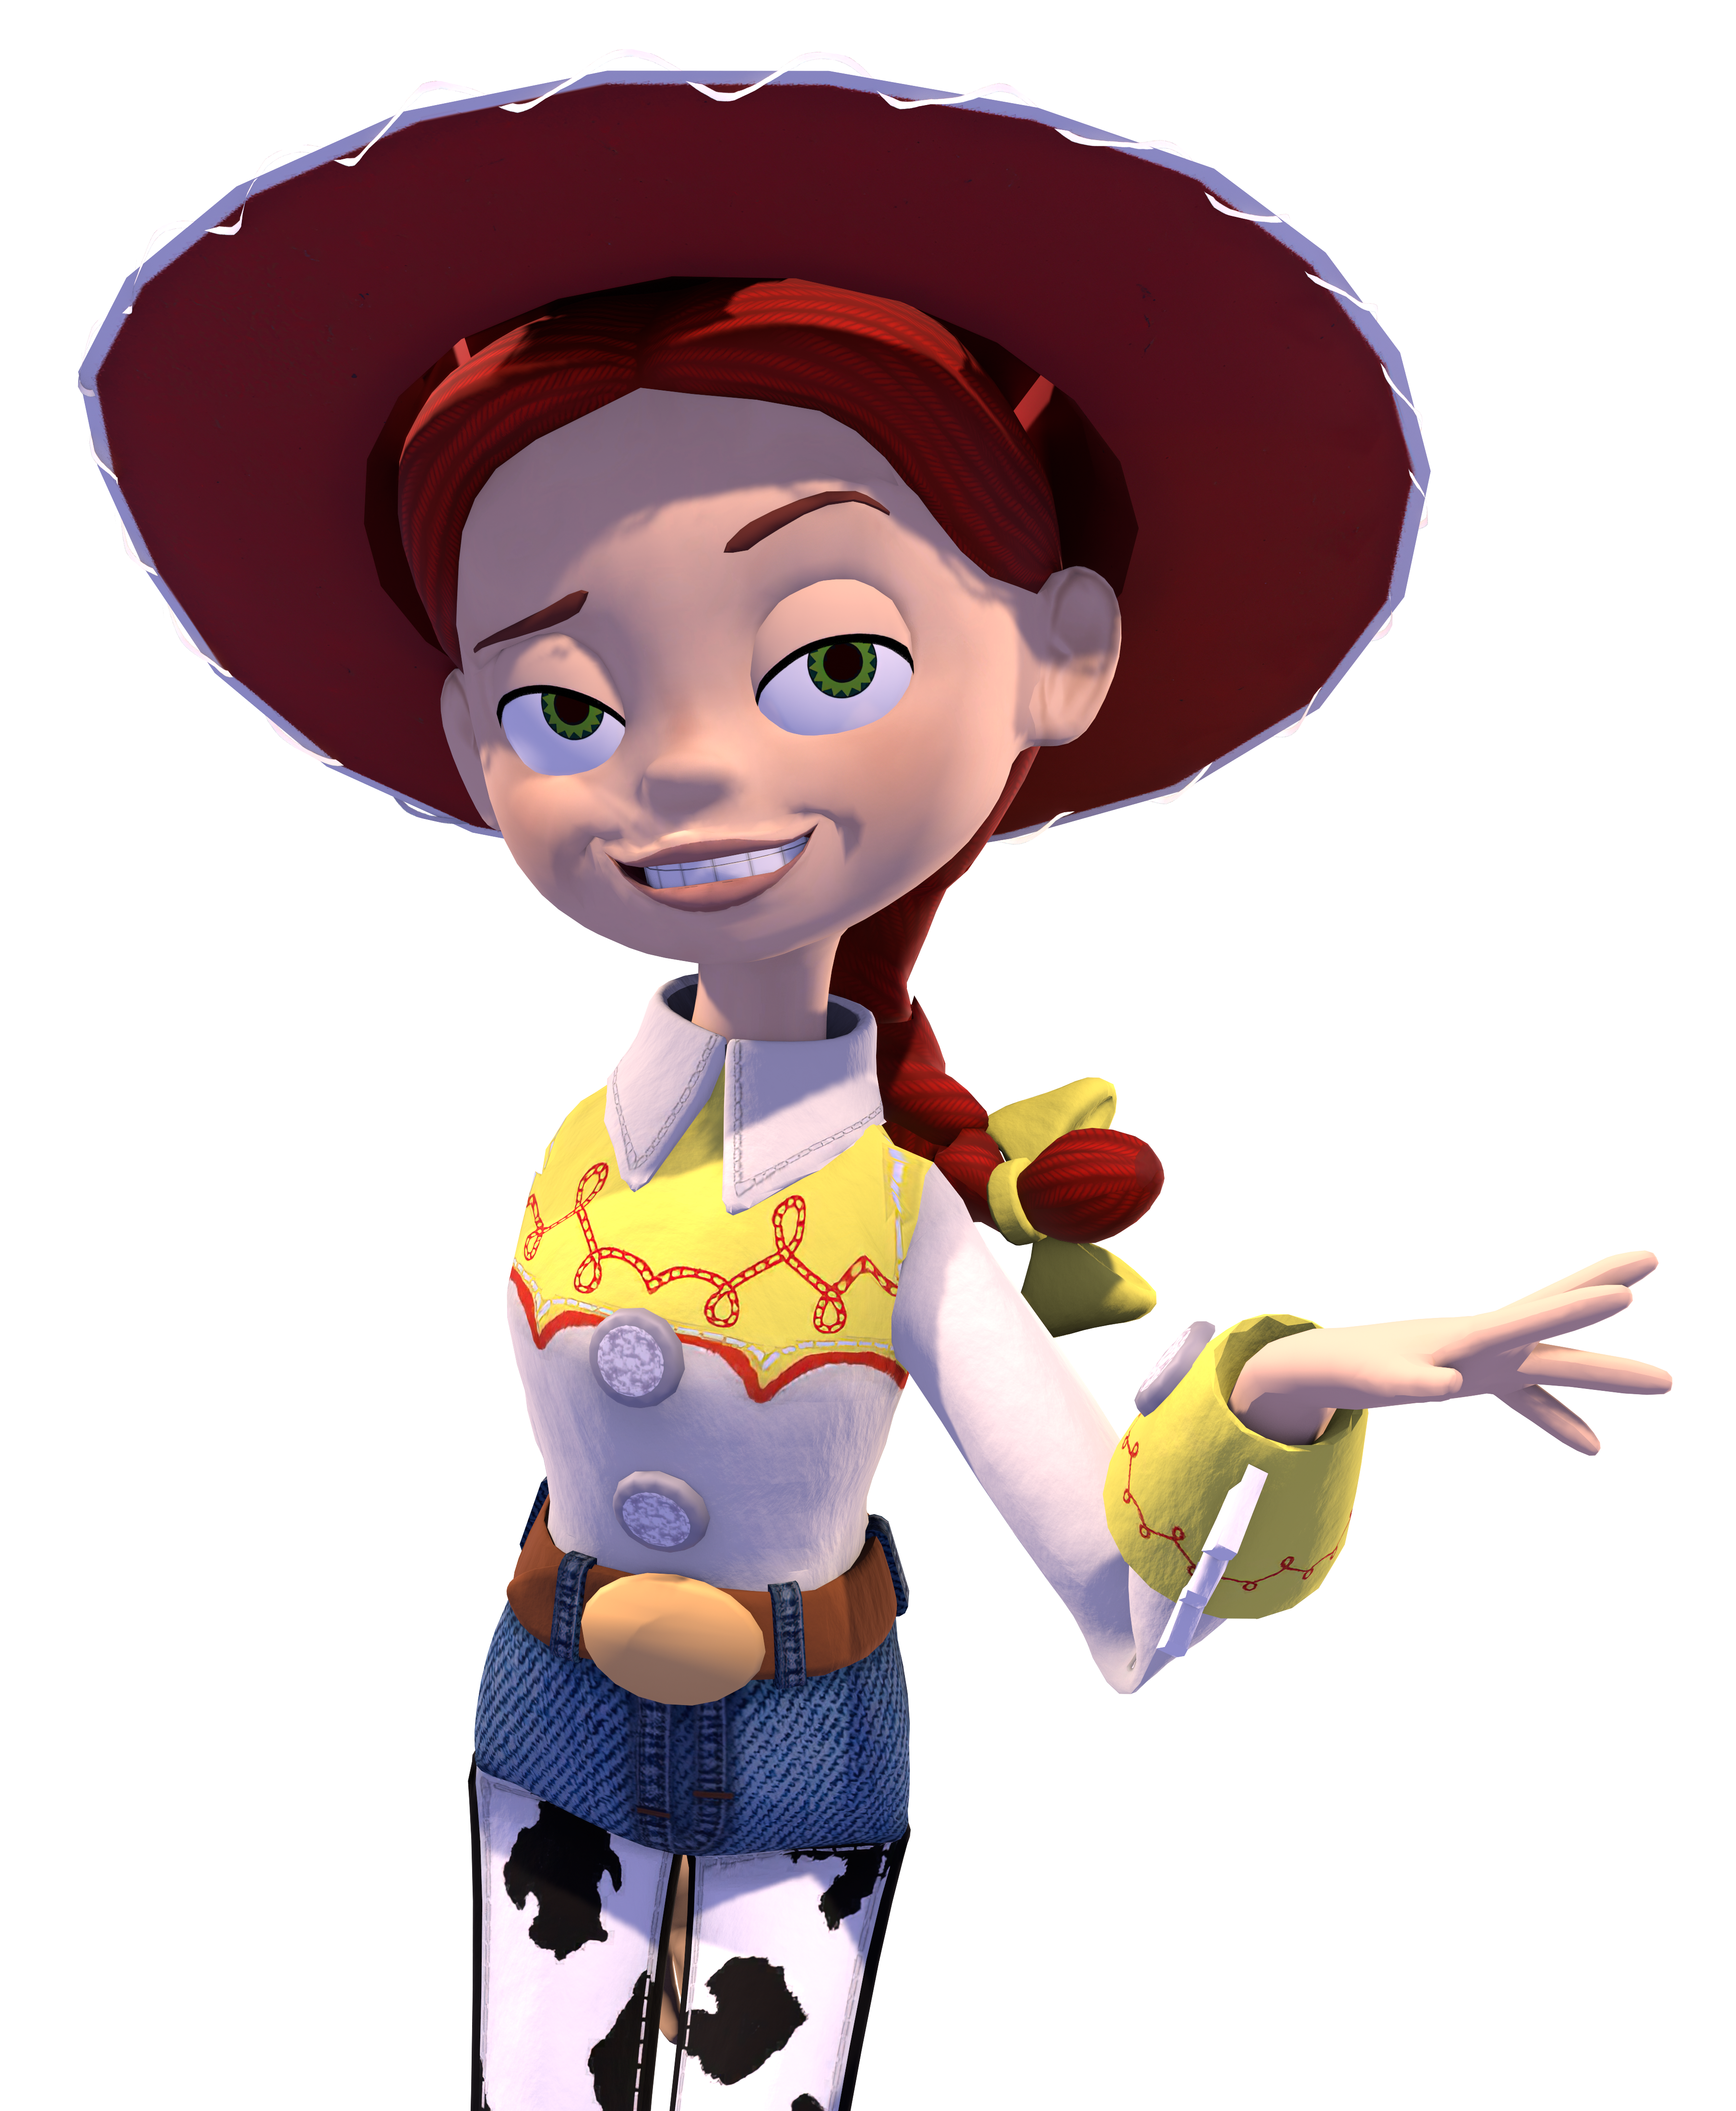 Jessie (Toy Story) PNG by jakeysamra on DeviantArt